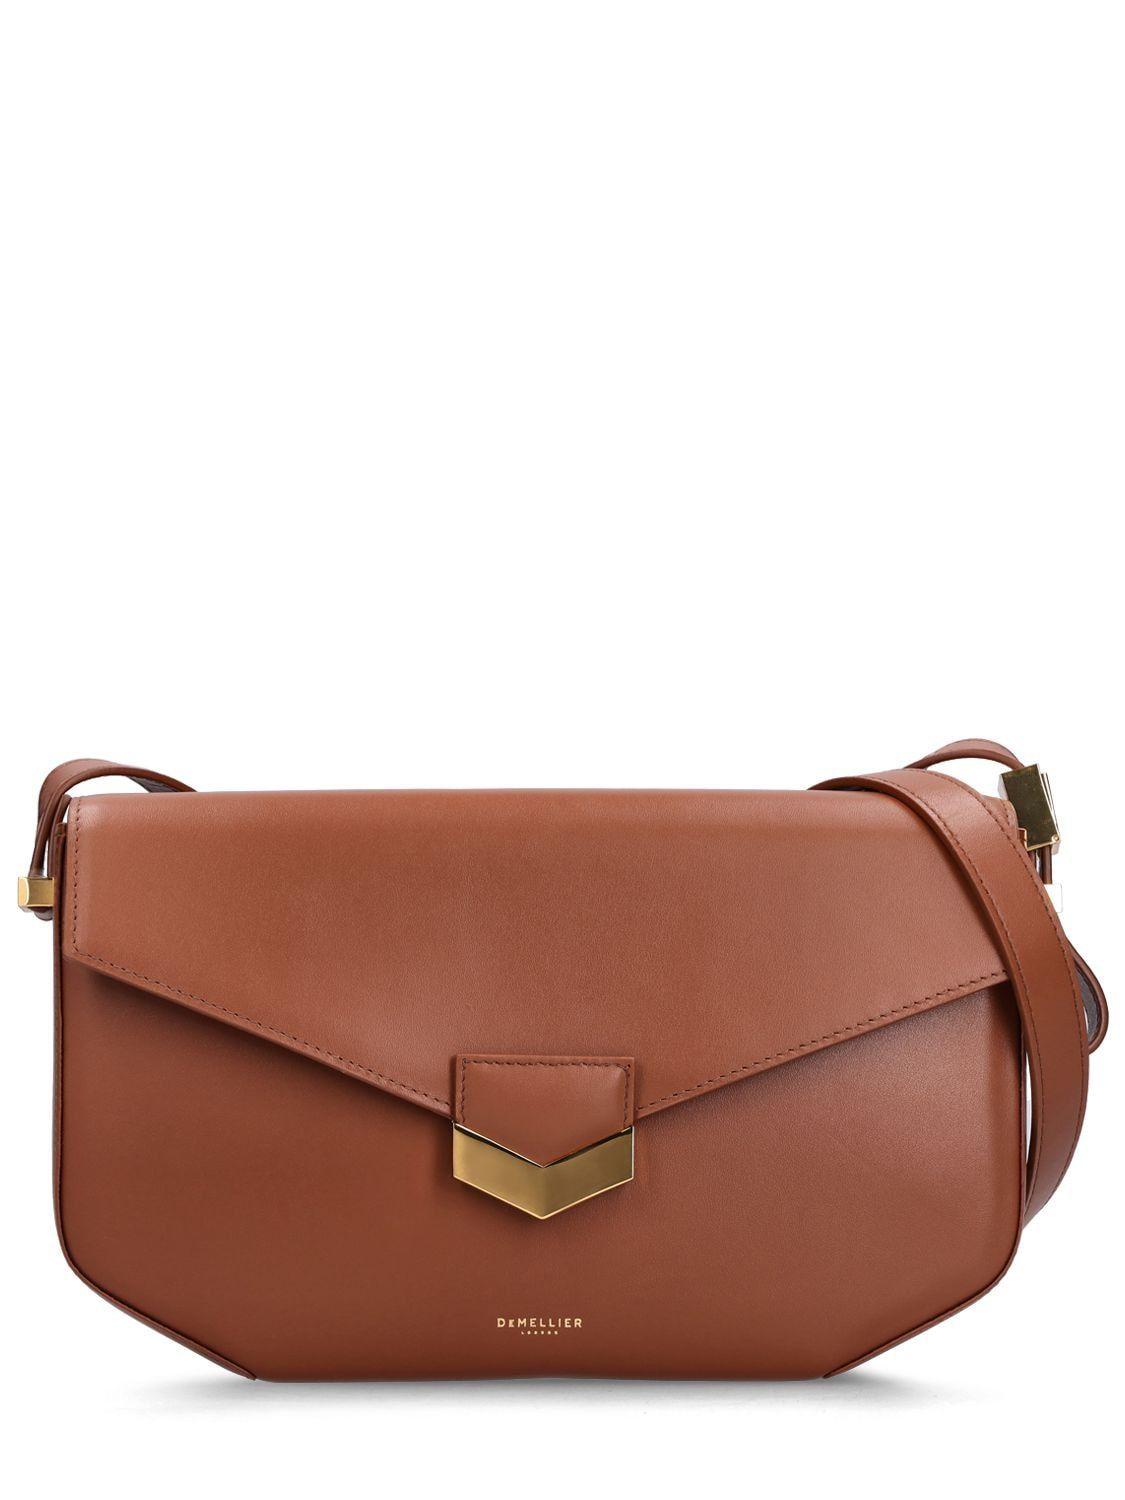 DeMellier Midi London Leather Shoulder Bag in Brown | Lyst